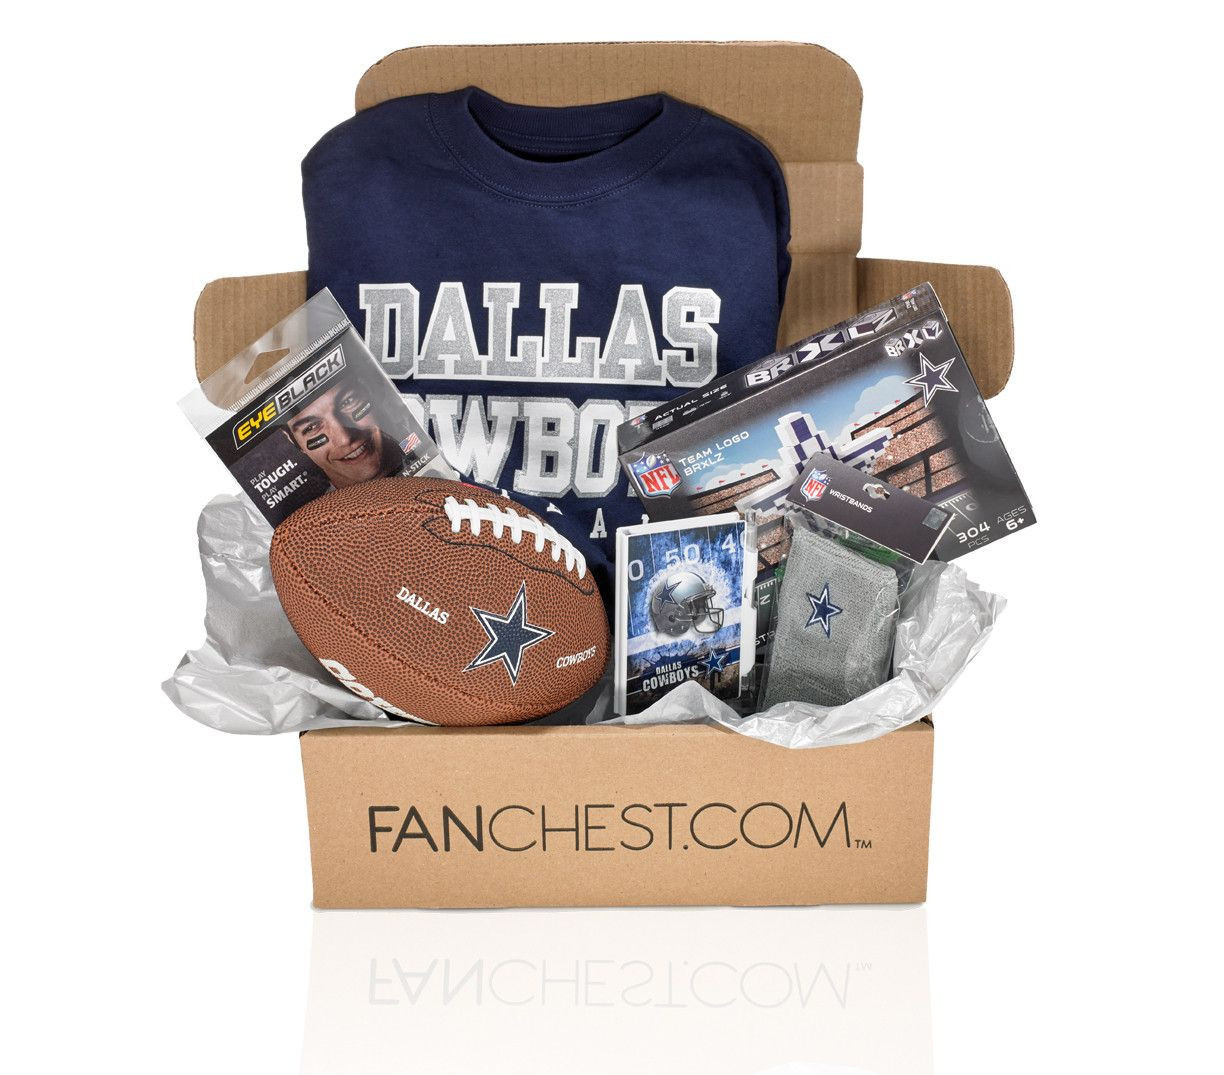 Dallas Cowboys Fan Gift Ideas
 The Best Dallas Cowboys Fan Gift Ideas – Home Family